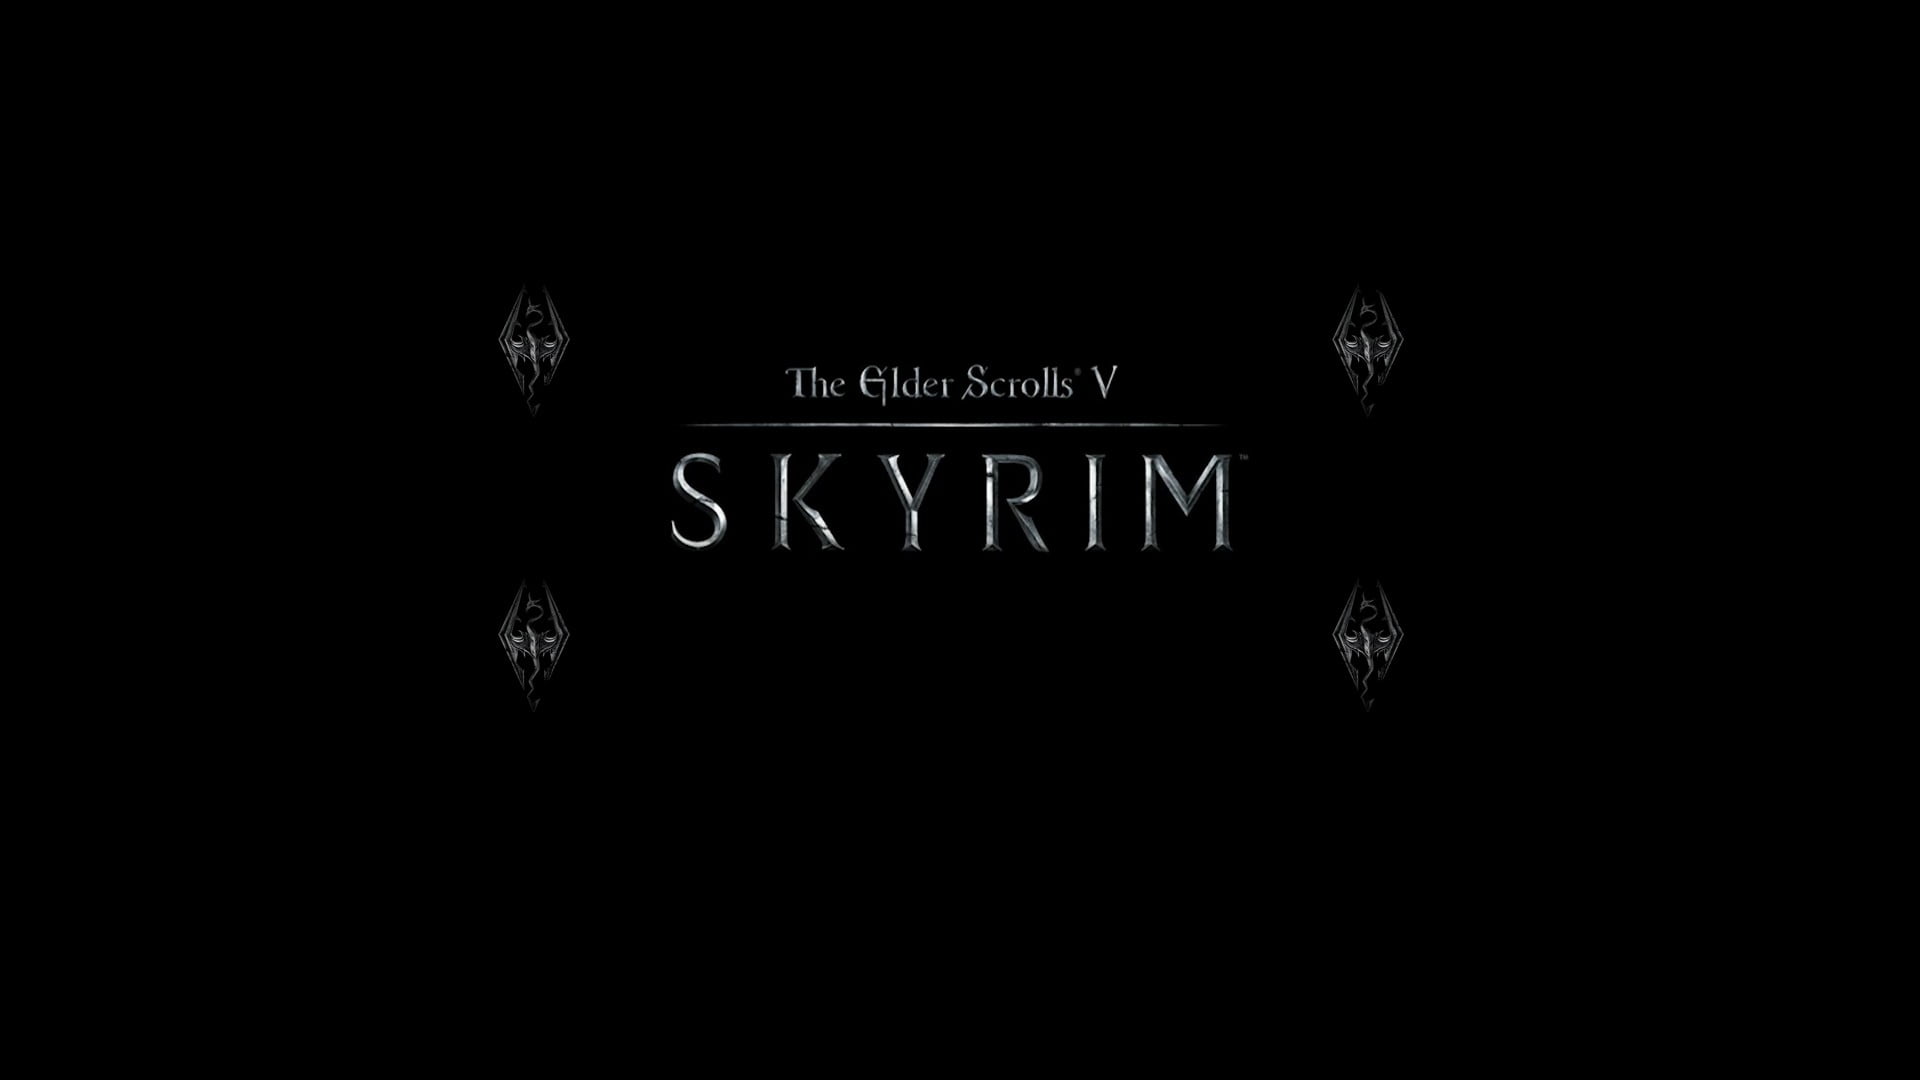 Skyrim wallpaper, The Elder Scrolls V: Skyrim, text, western script